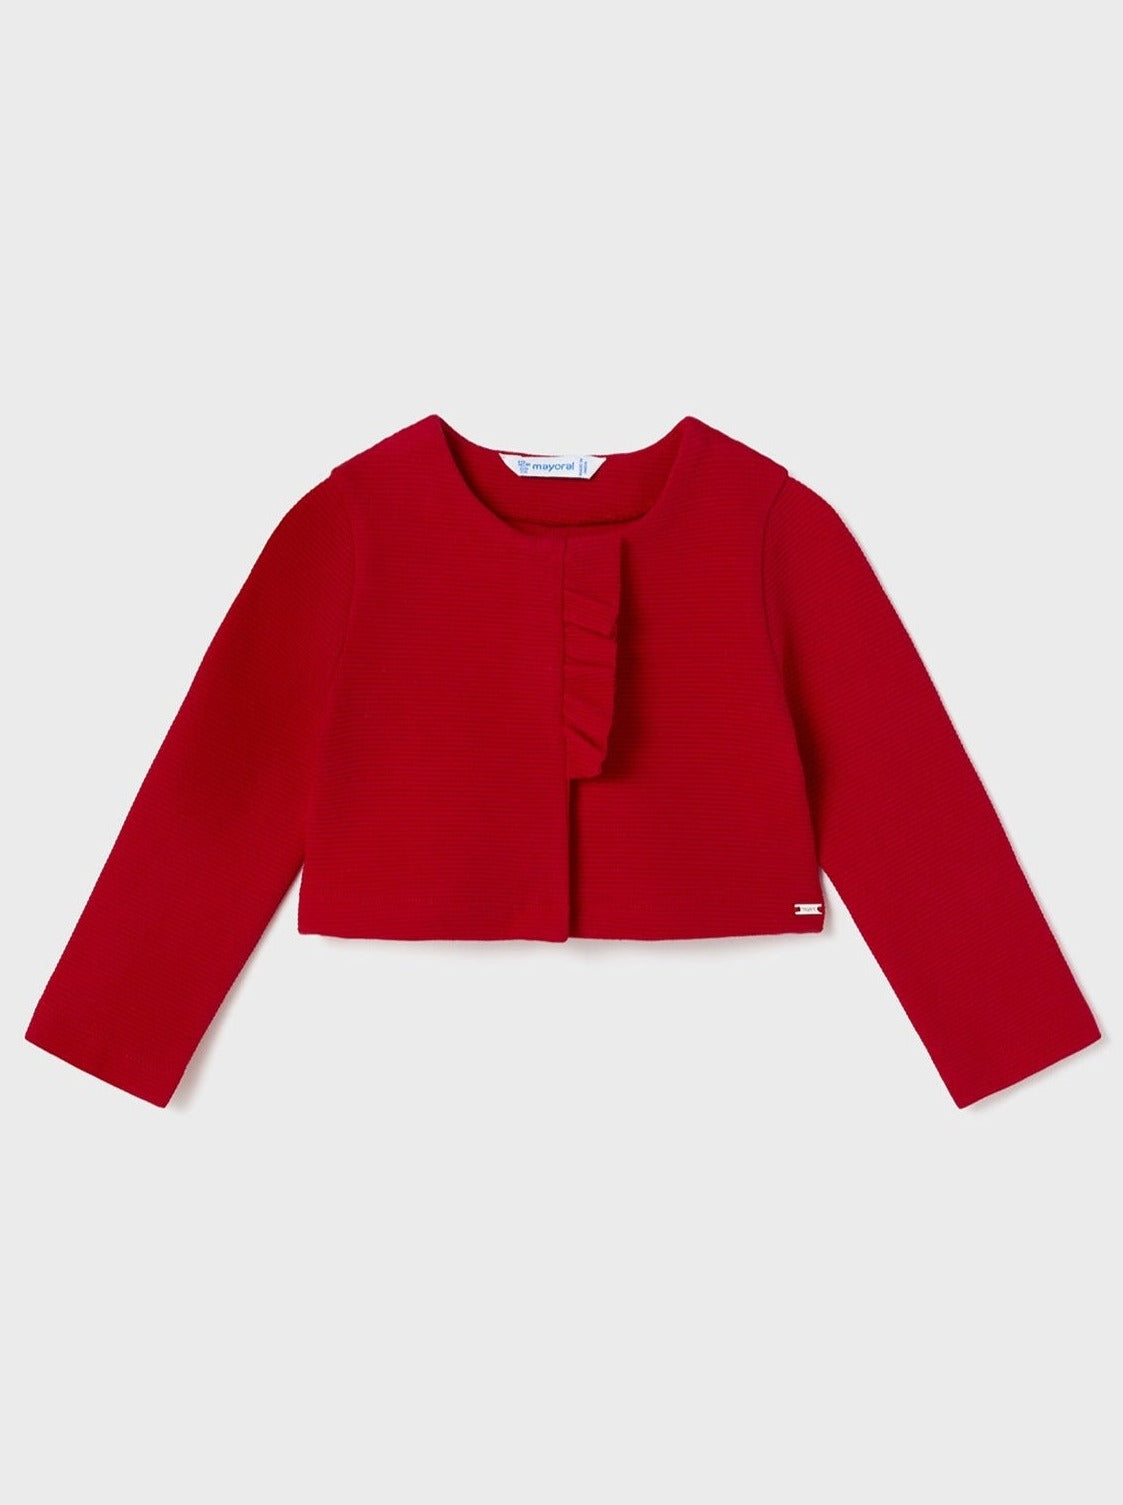 Mayoral Baby T-Shirt, Cardigan & Leggings _Red 1774-014